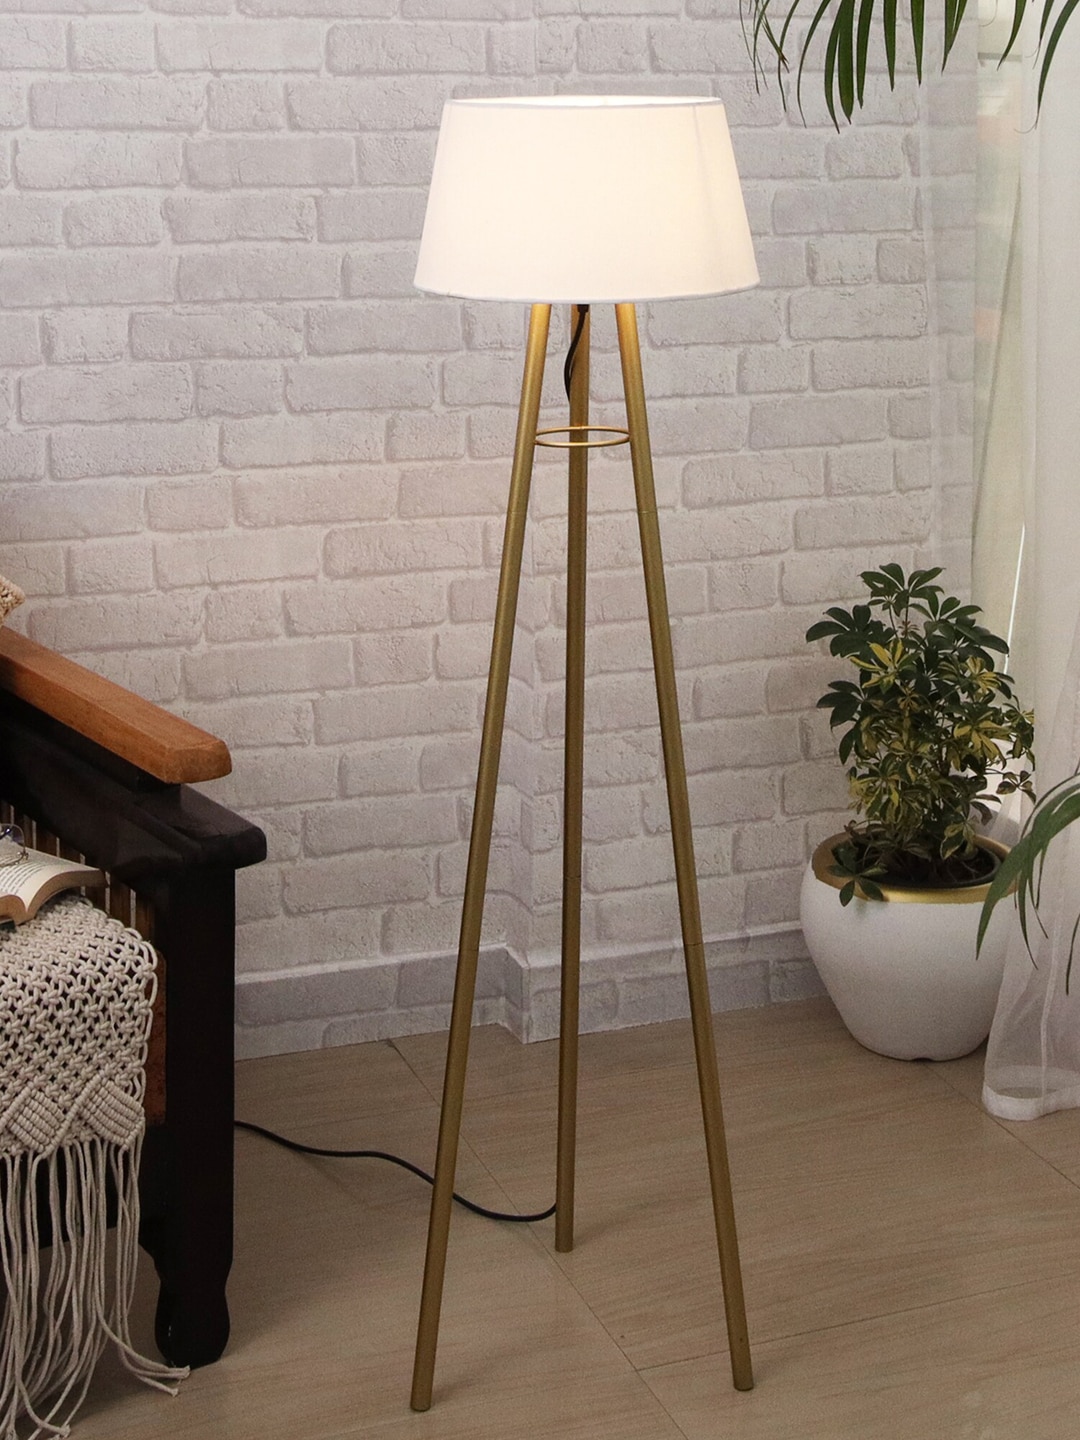 Homesake White Tripod Floor Lamp With White Shade Price in India